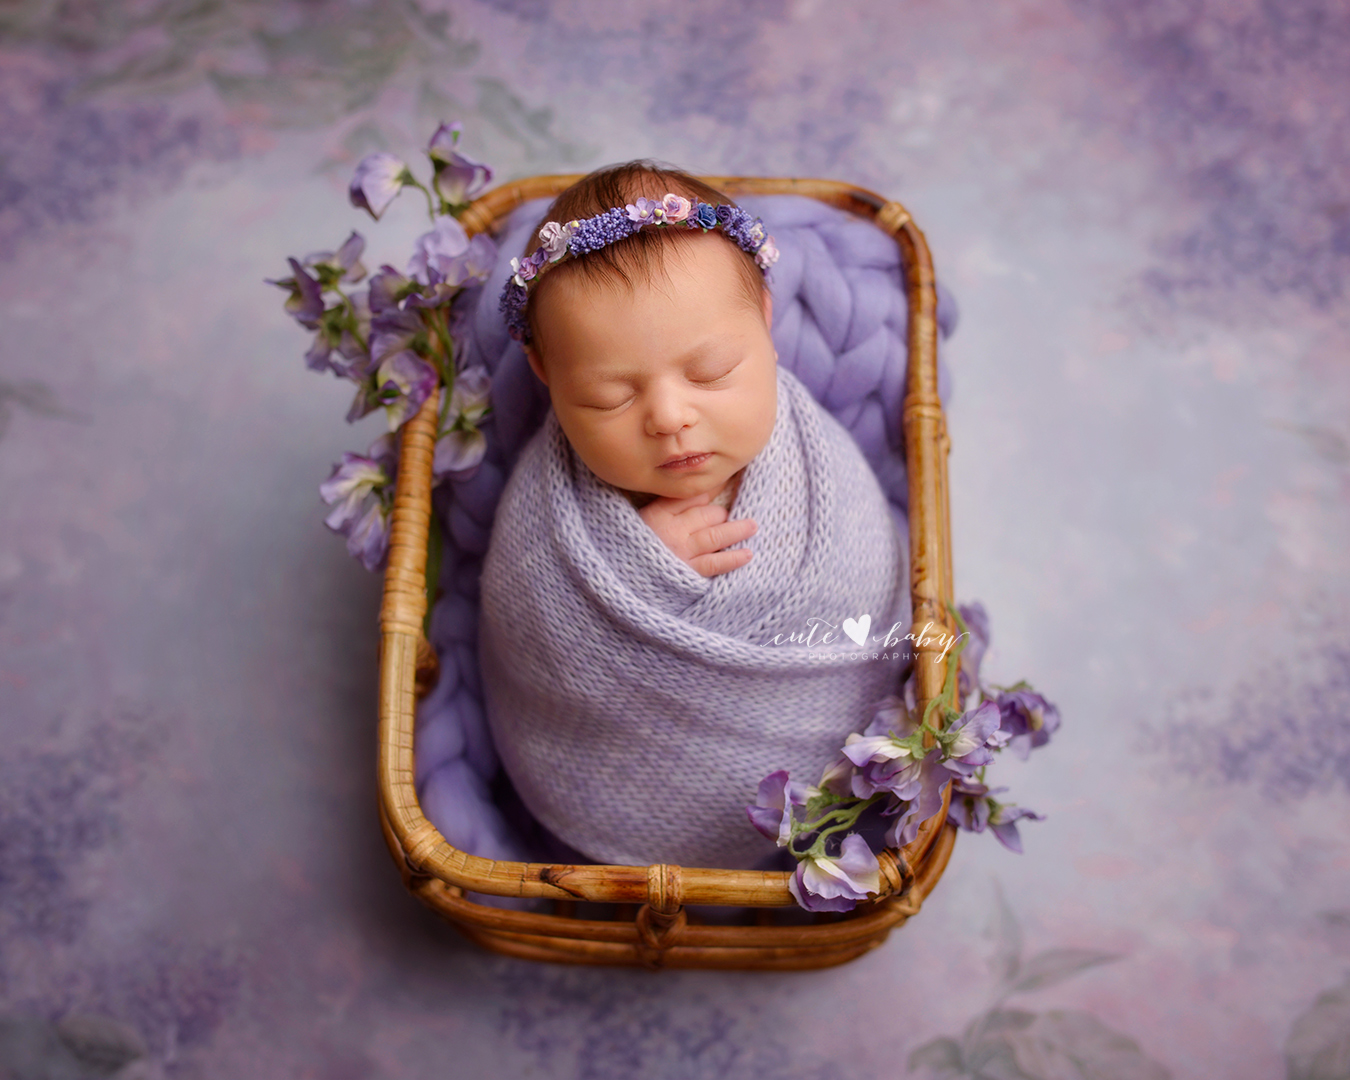 Newborn Photography Manchester, Newborn Photography Manchester by Cute Baby Photography, Studio Newborn photography, Baby Photography, Newborn Session Manchester